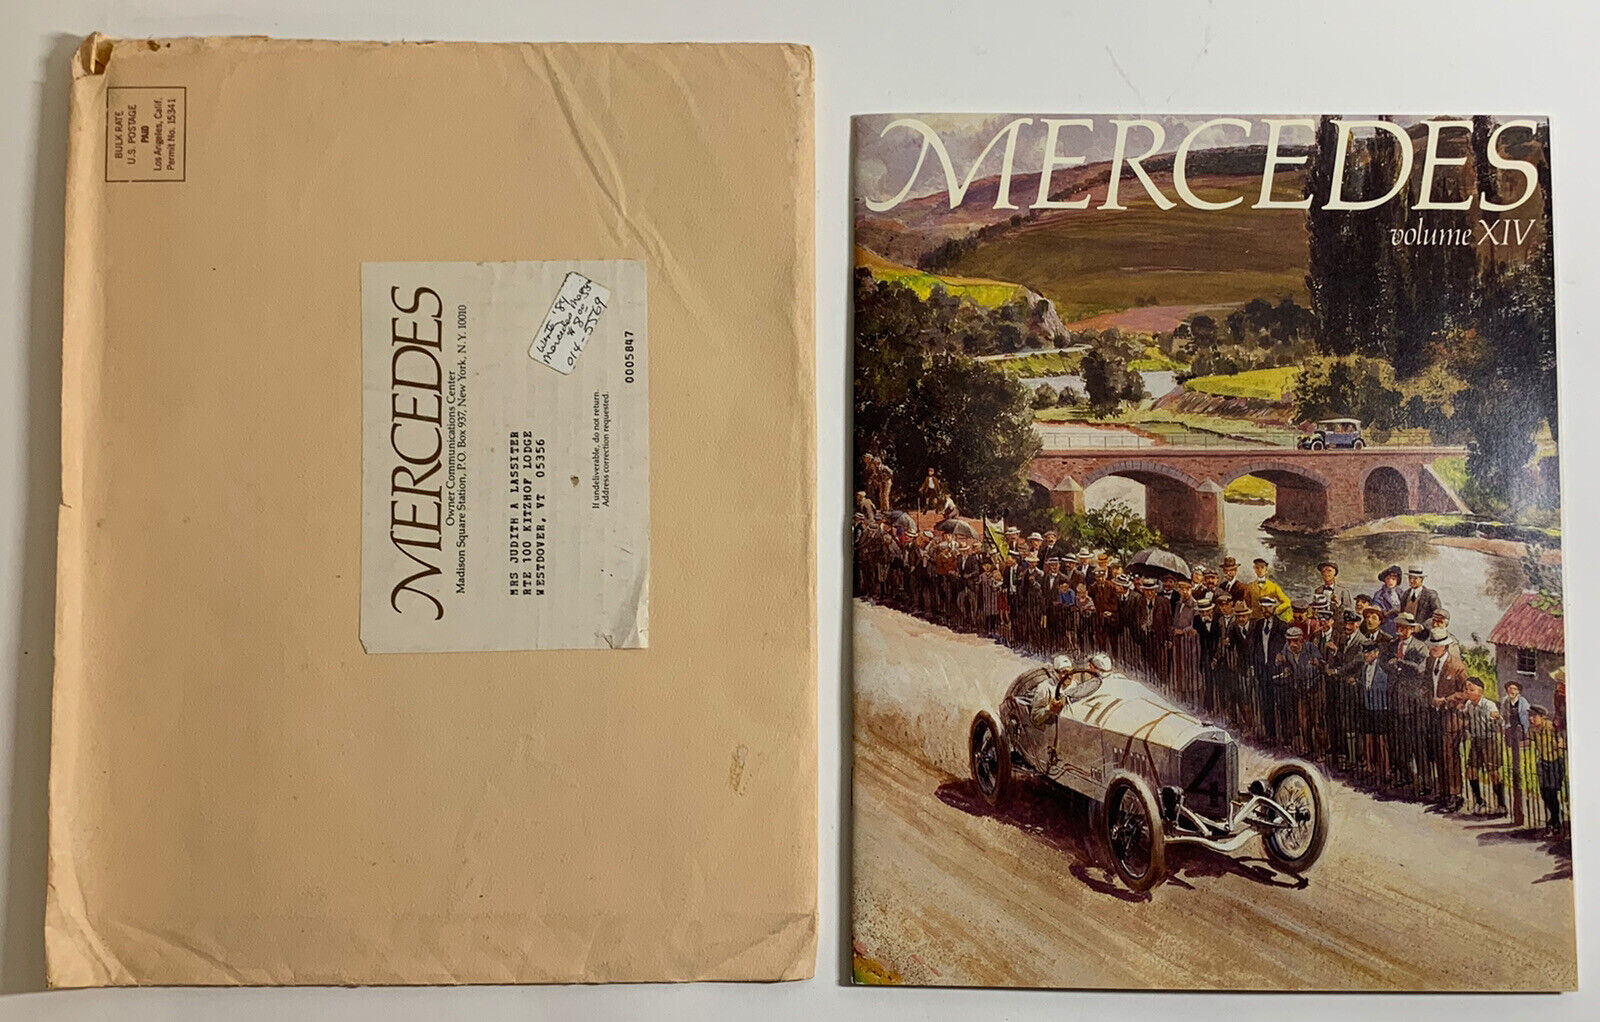 Vintage MAGAZINE: 1984 Mercedes - Issue XIV - Excellent Condition + Envelope